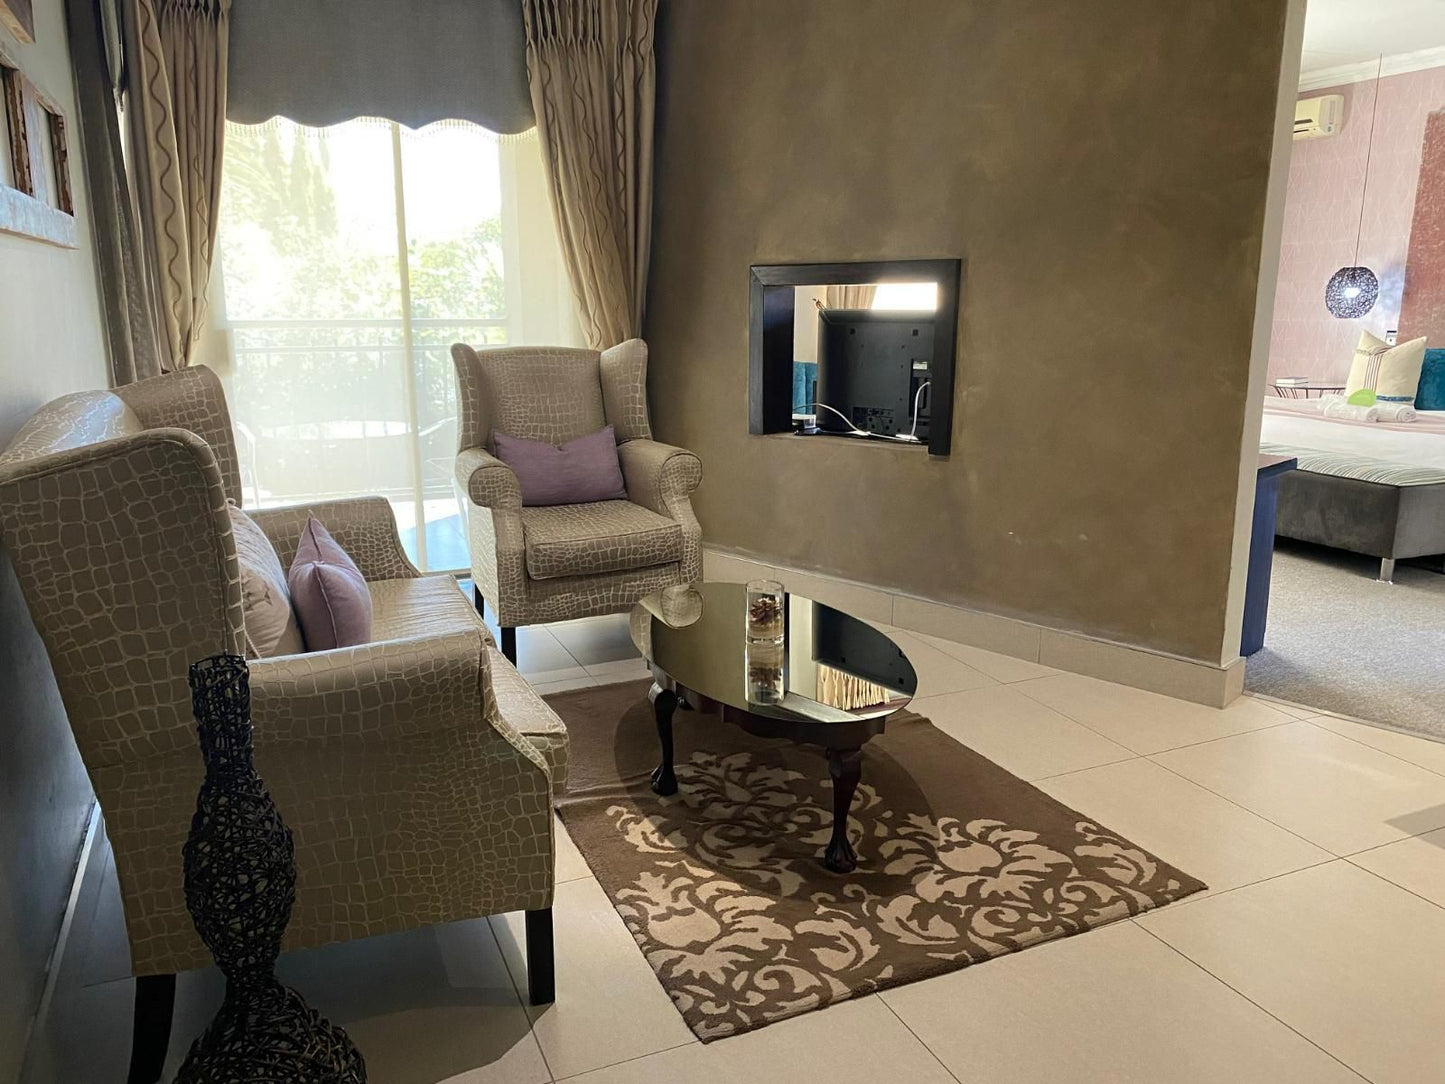 Allegro Guest House Bloemfontein Bayswater Bloemfontein Free State South Africa Living Room